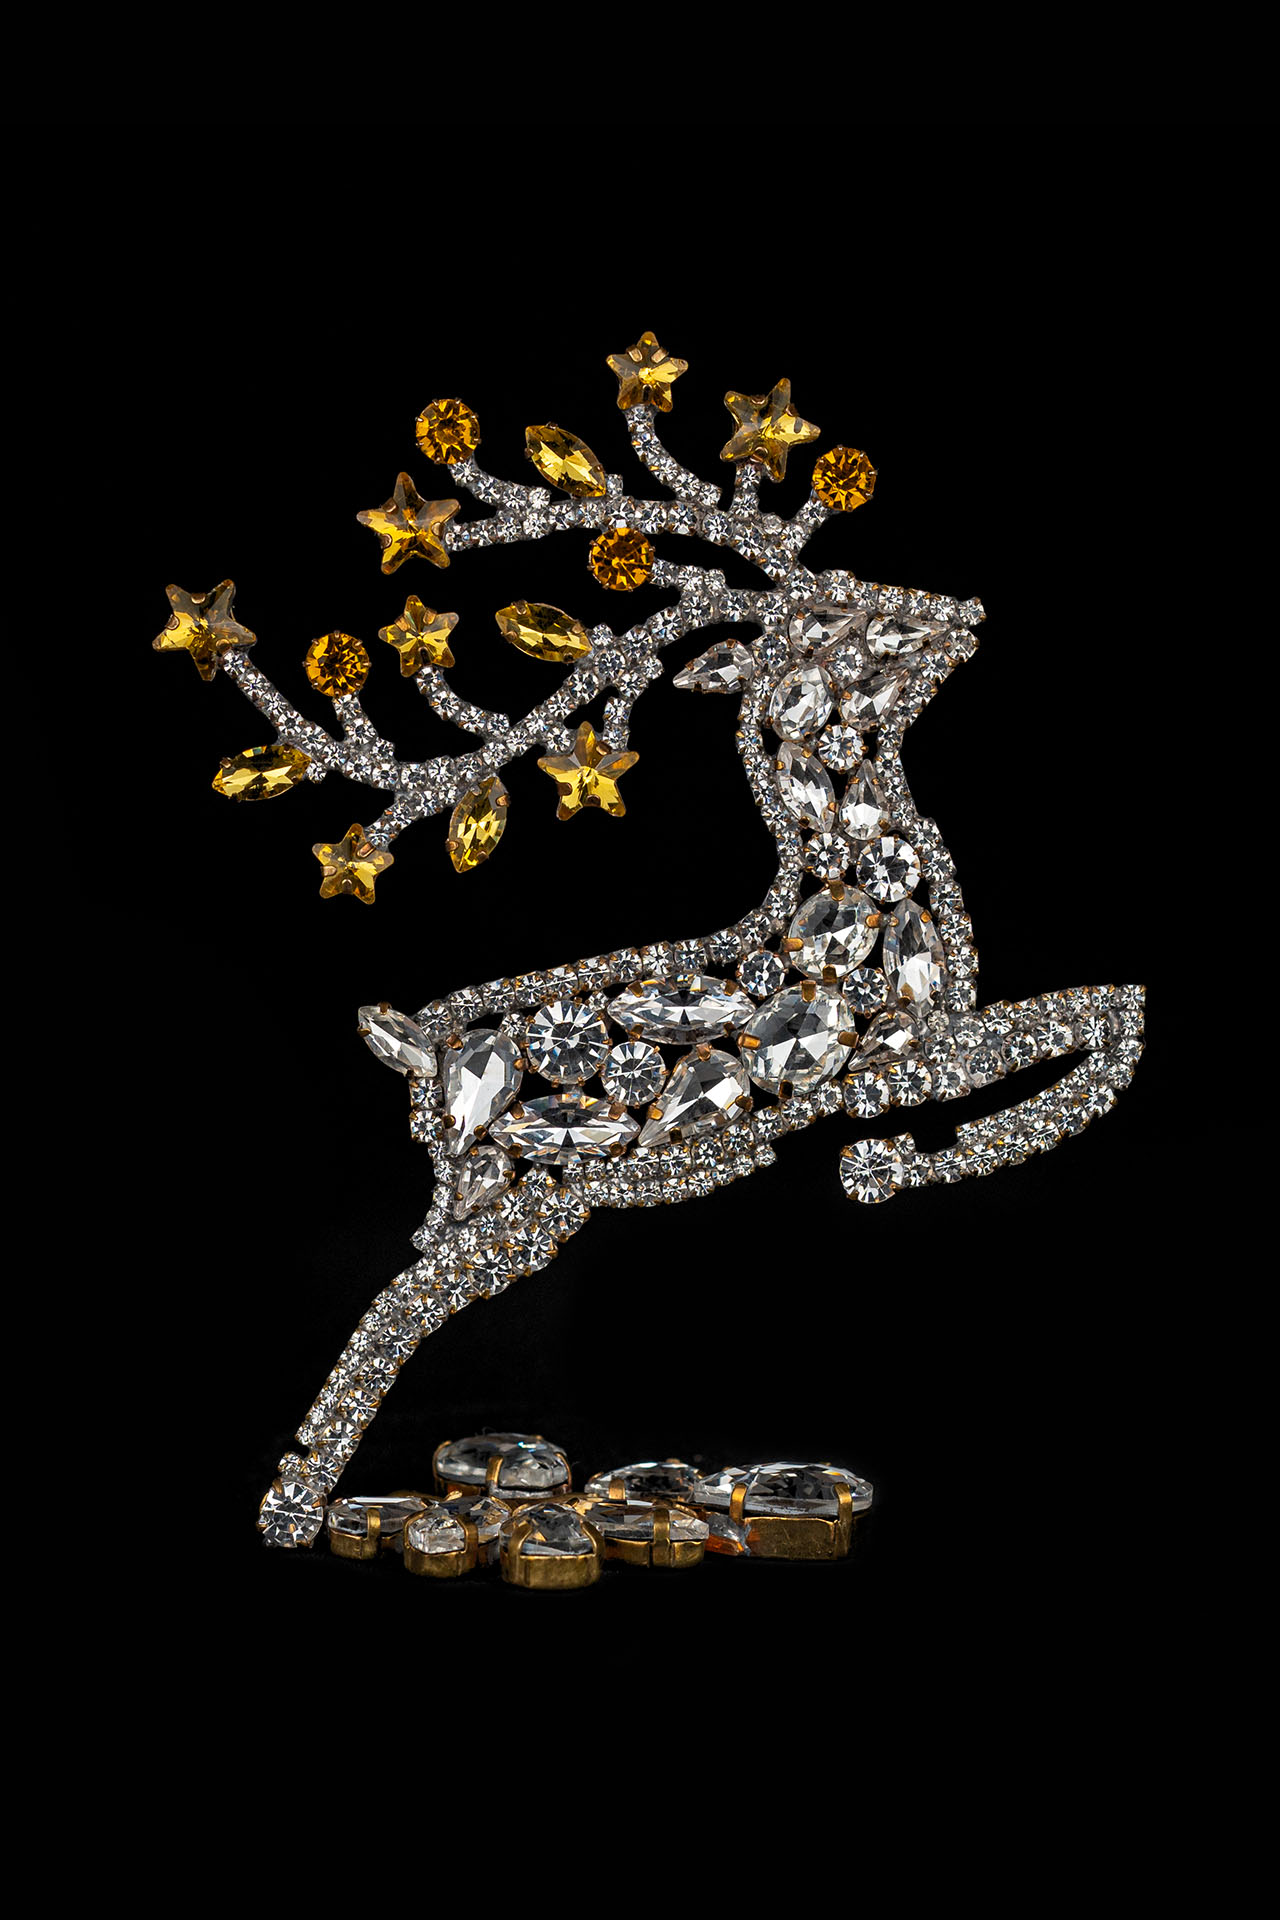 Decorative reindeer figurine with yellow rhinestones - facing right